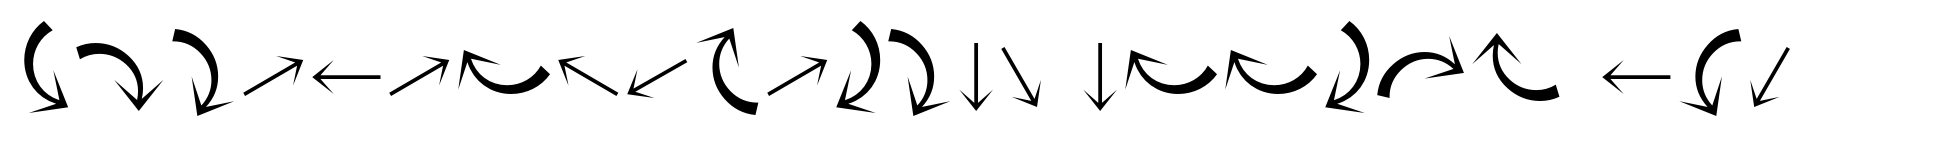 Omnidirectional Arrows JNL